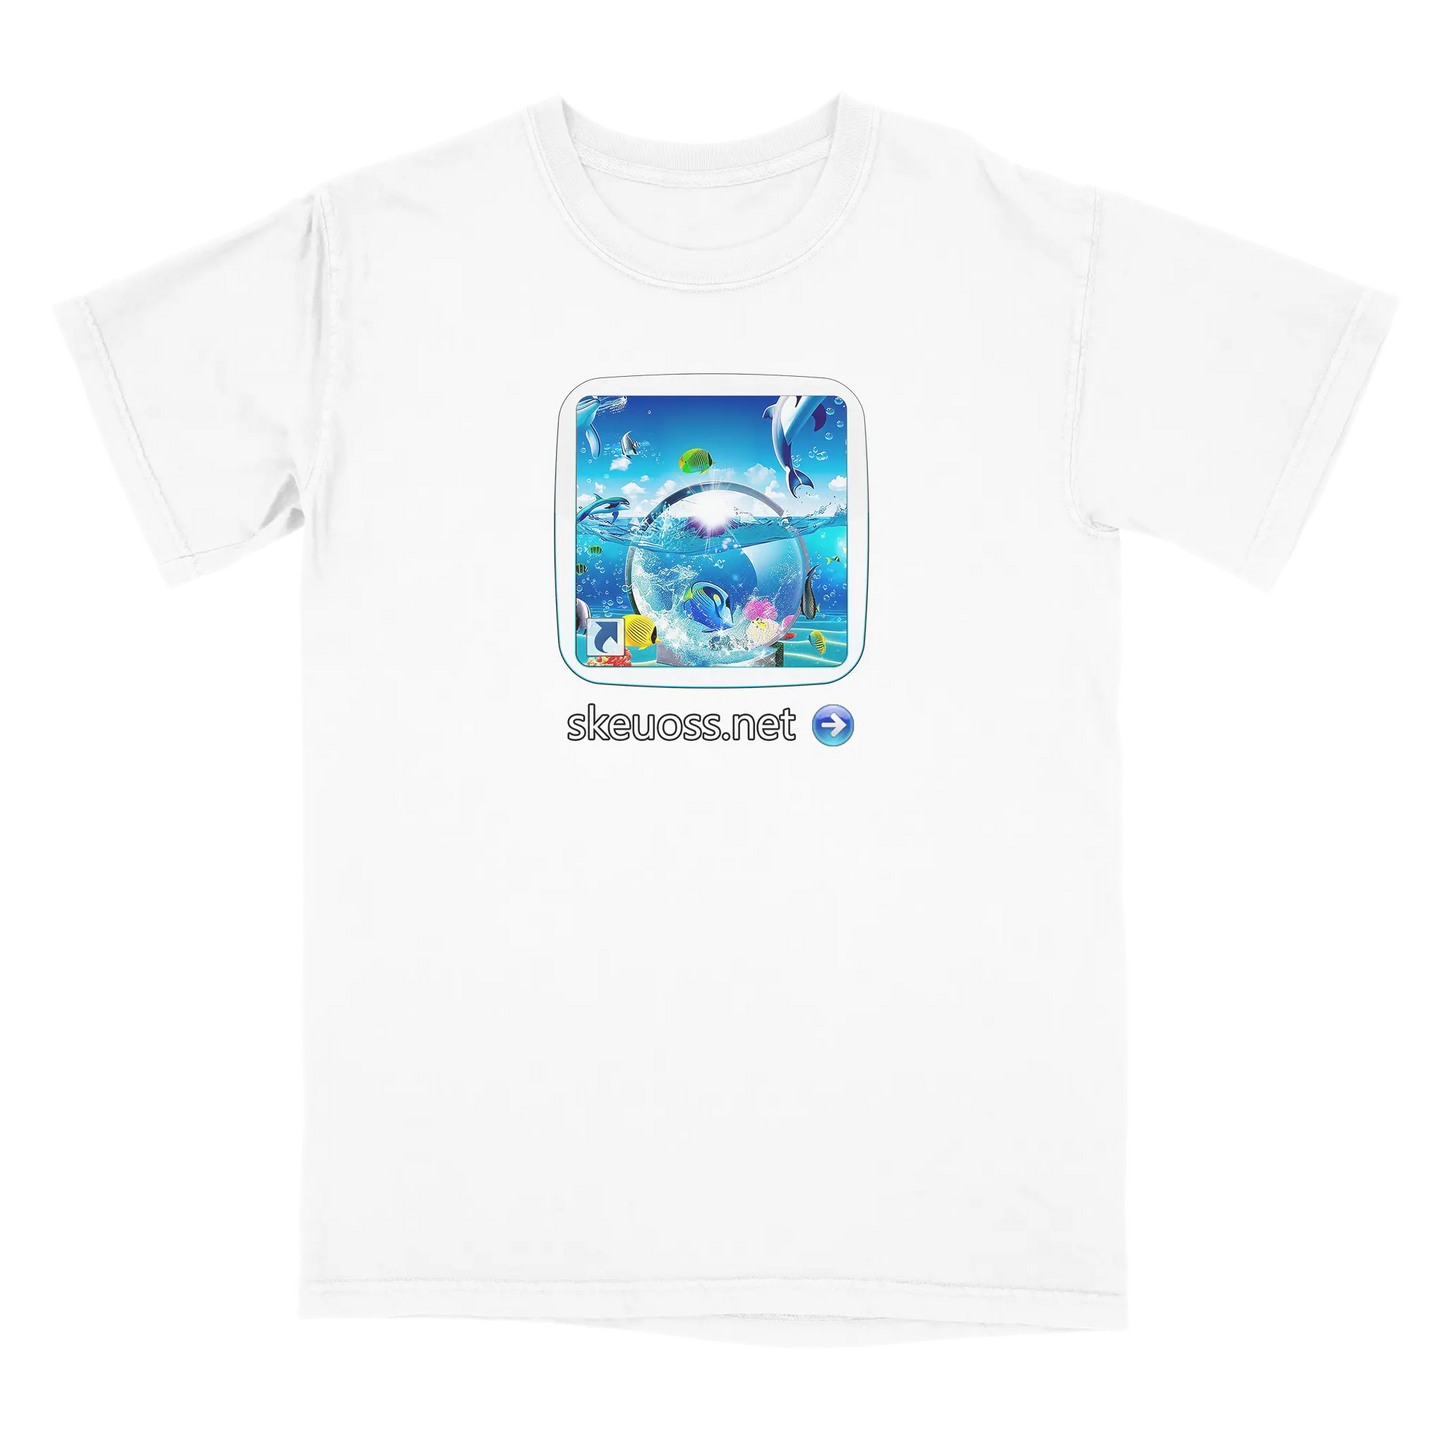 Frutiger Aero T-shirt - User Login Collection - User 287